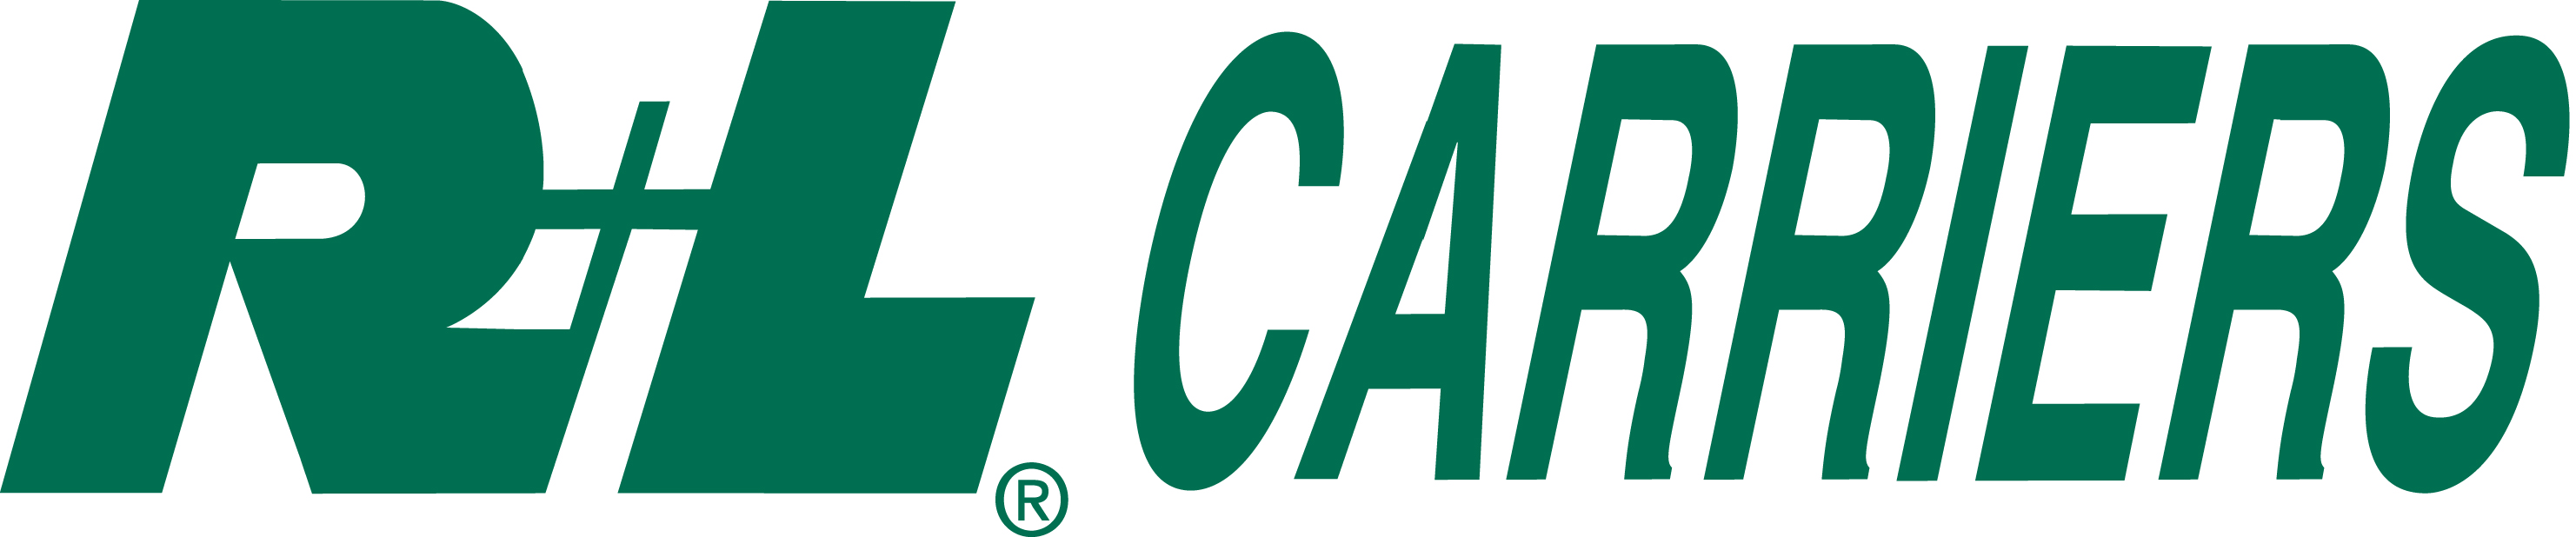 rl carriers logo